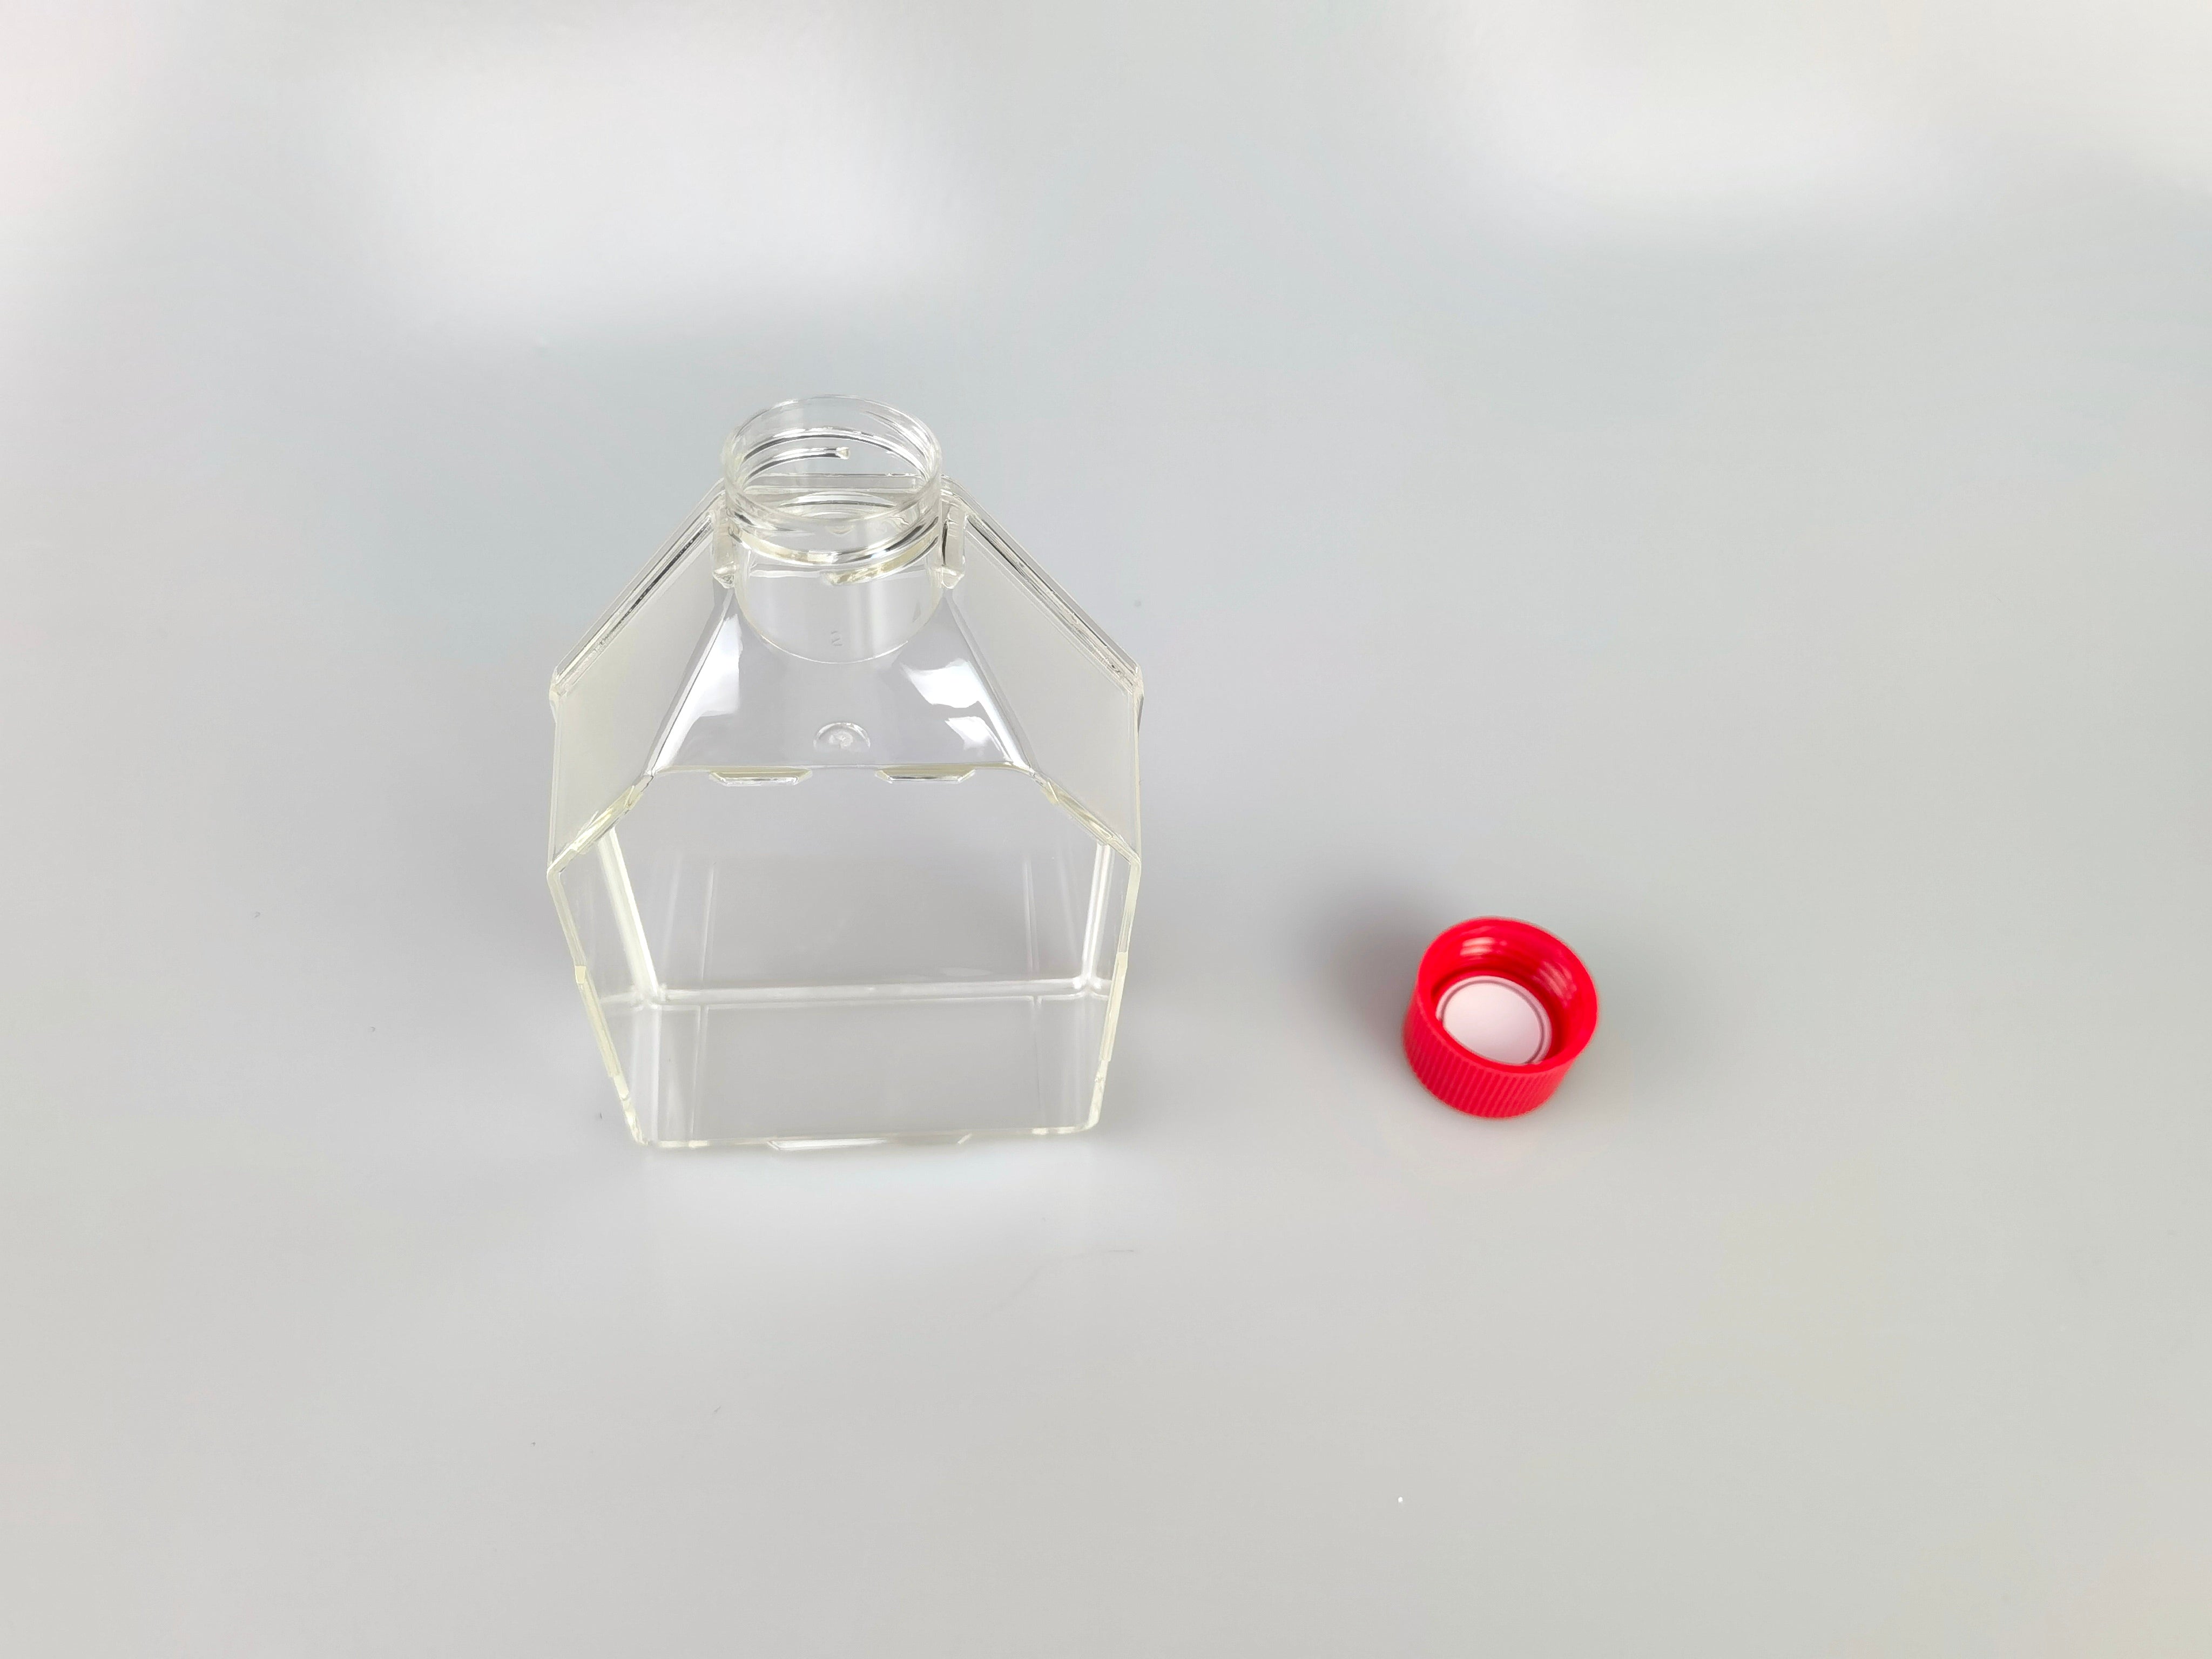 75cm² Cell Culture Flask, Vent Cap, TC treated